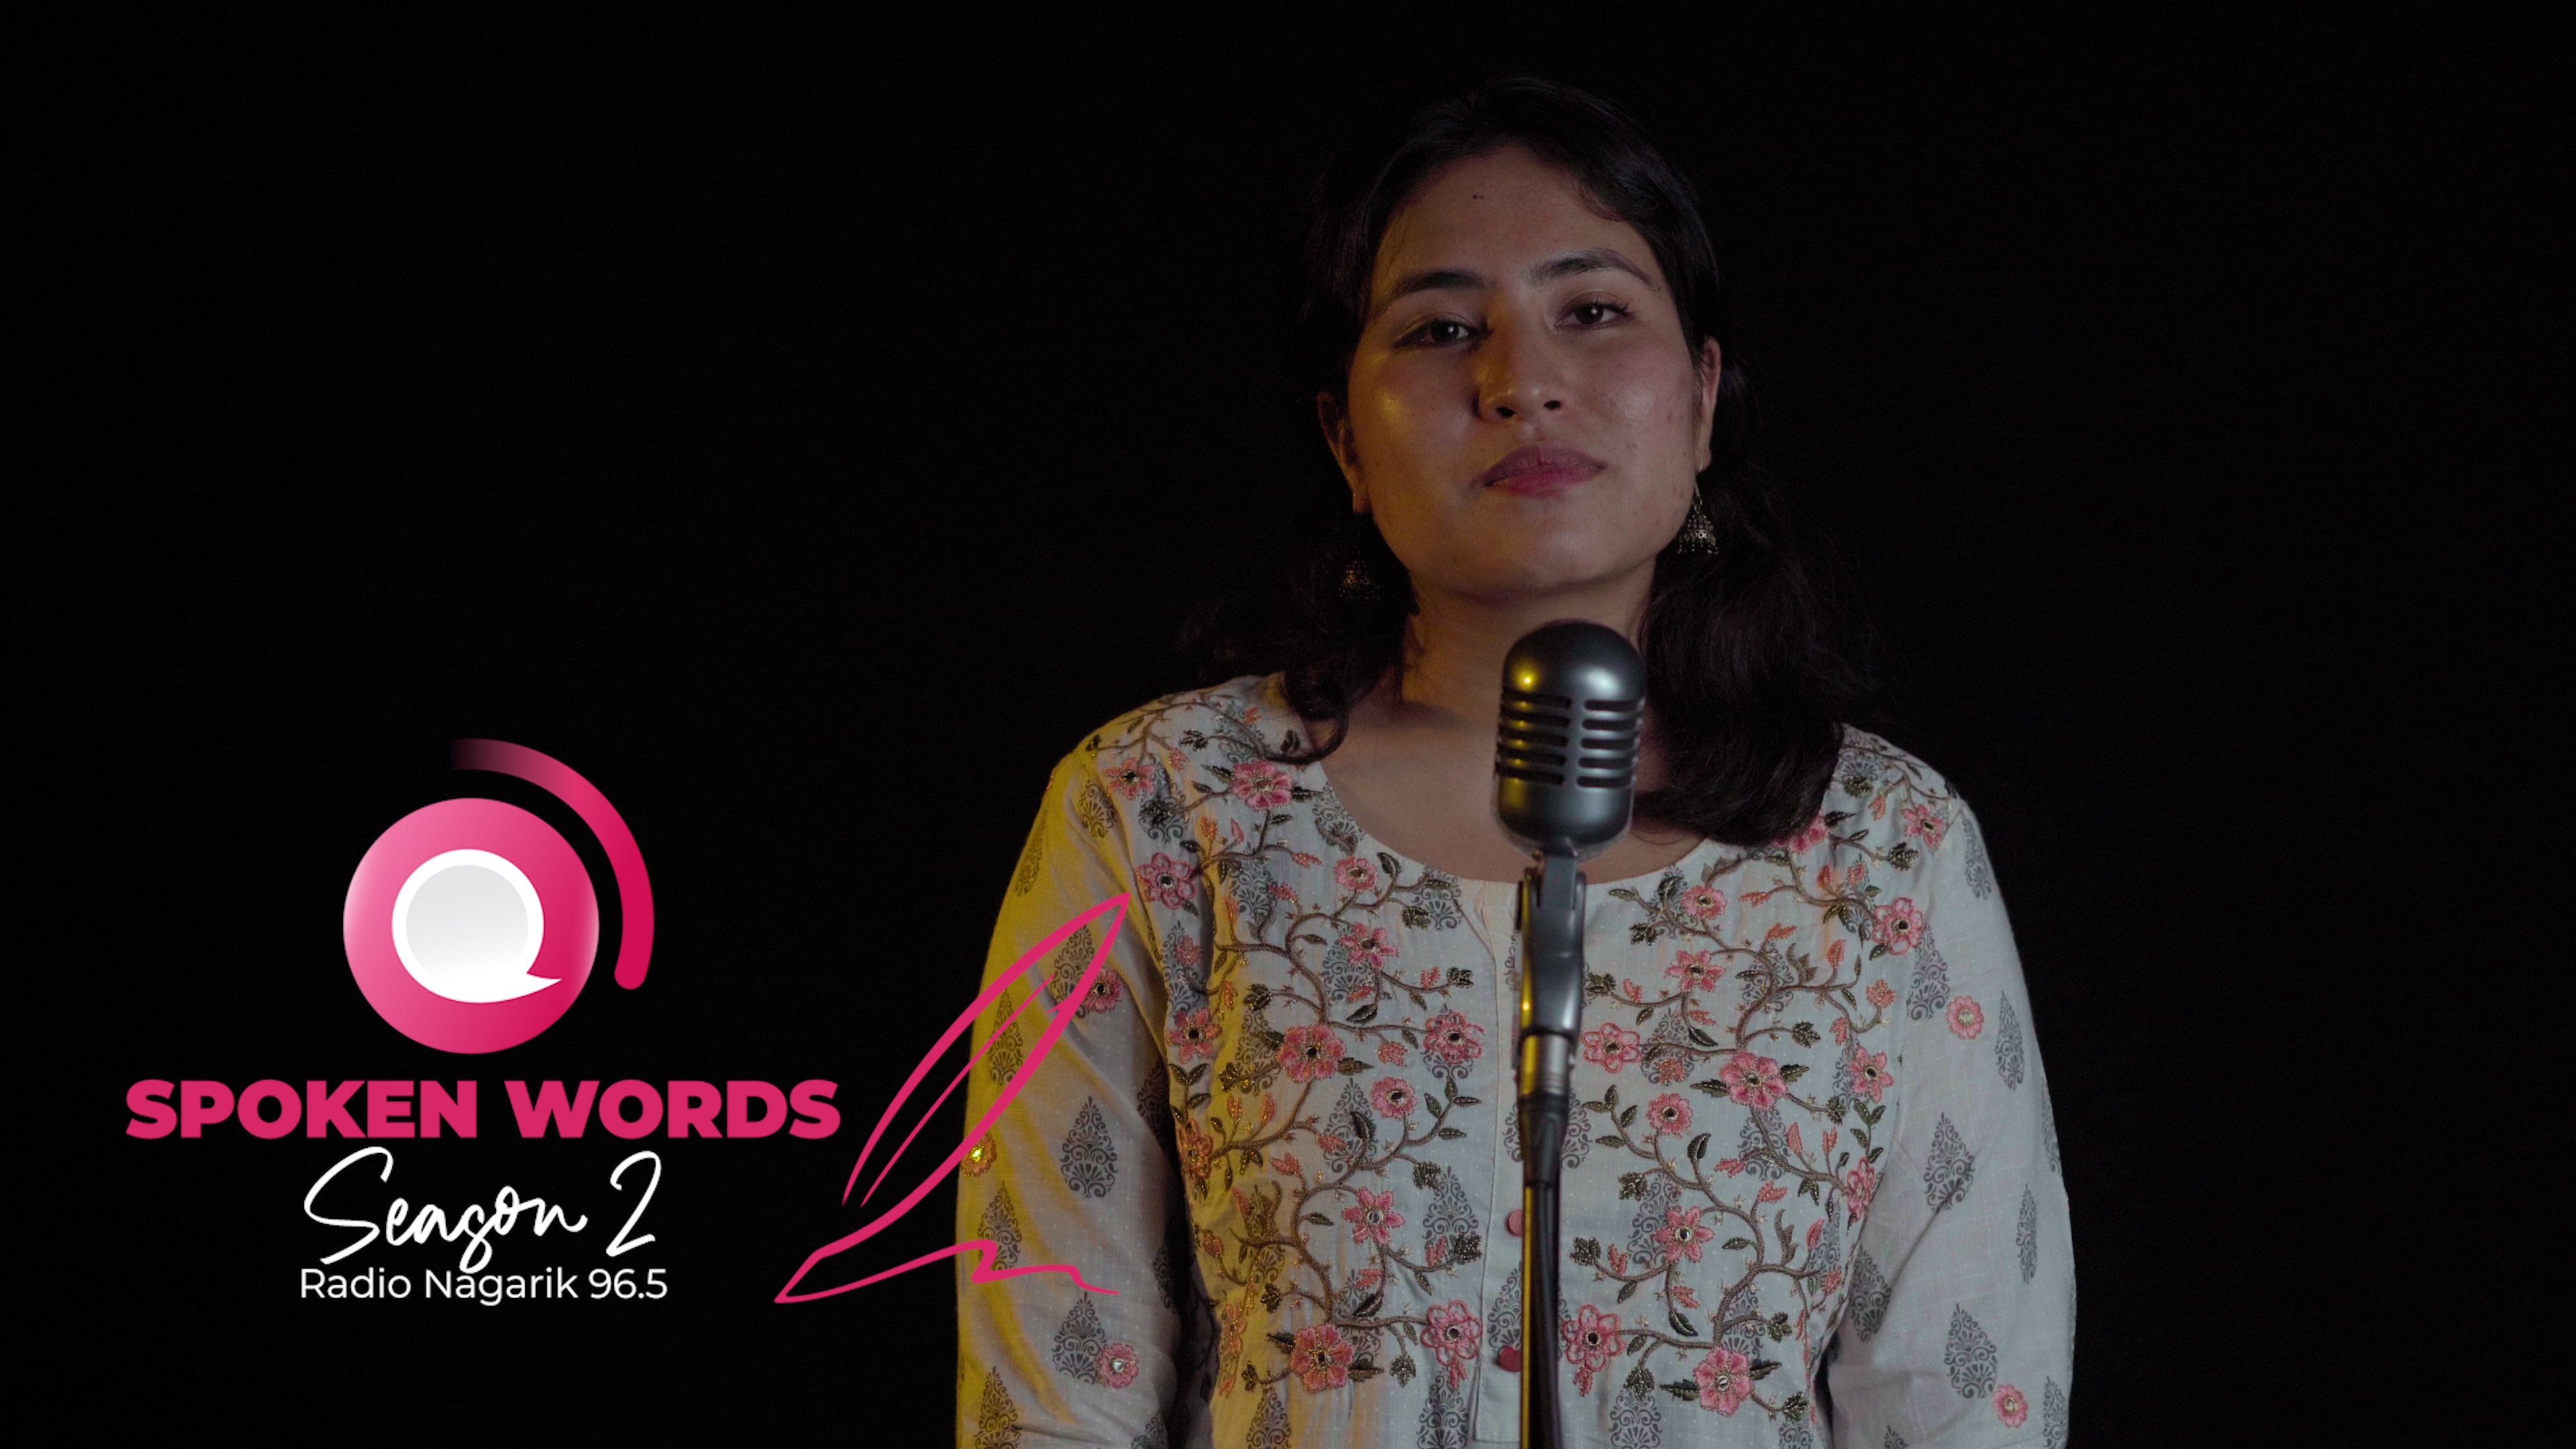 त्यो दाग कसरी हटाउ म? ( Tyo Daag Kasari Hatau Ma ) - Spoken Words / Performed by Prajeena Shrestha